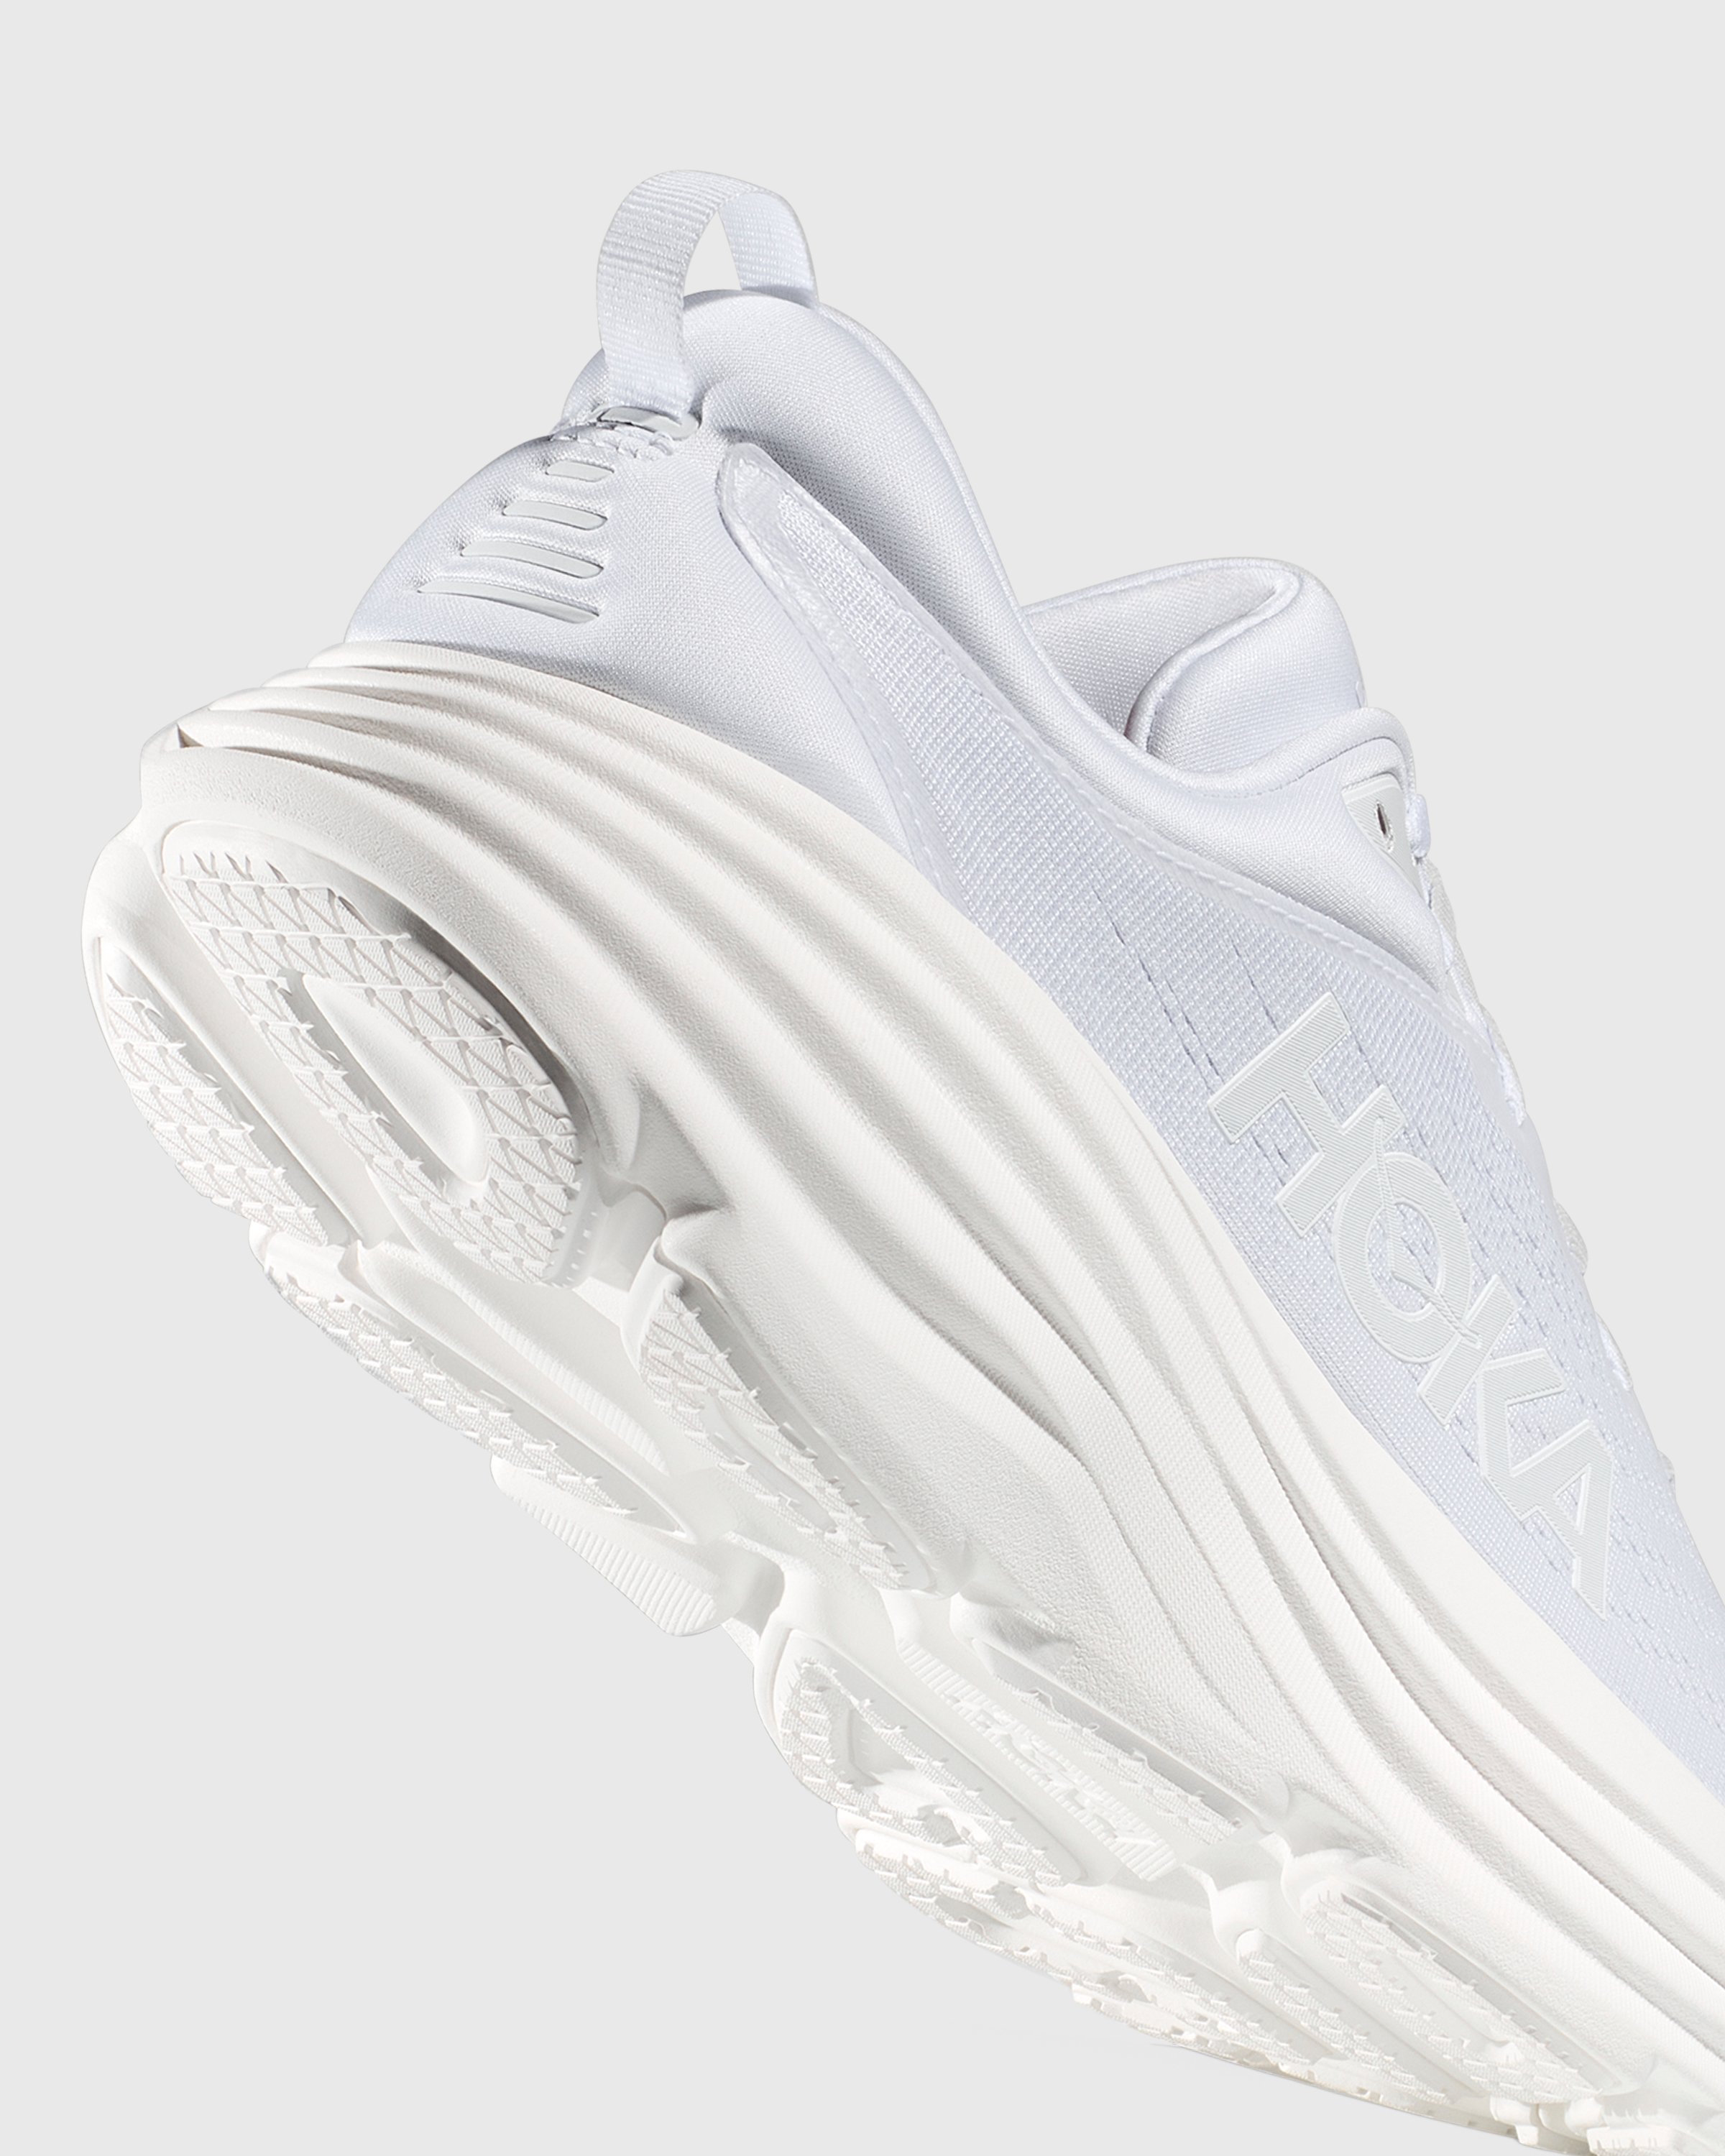 HOKA - M BONDI 8 White - Footwear - White - Image 3